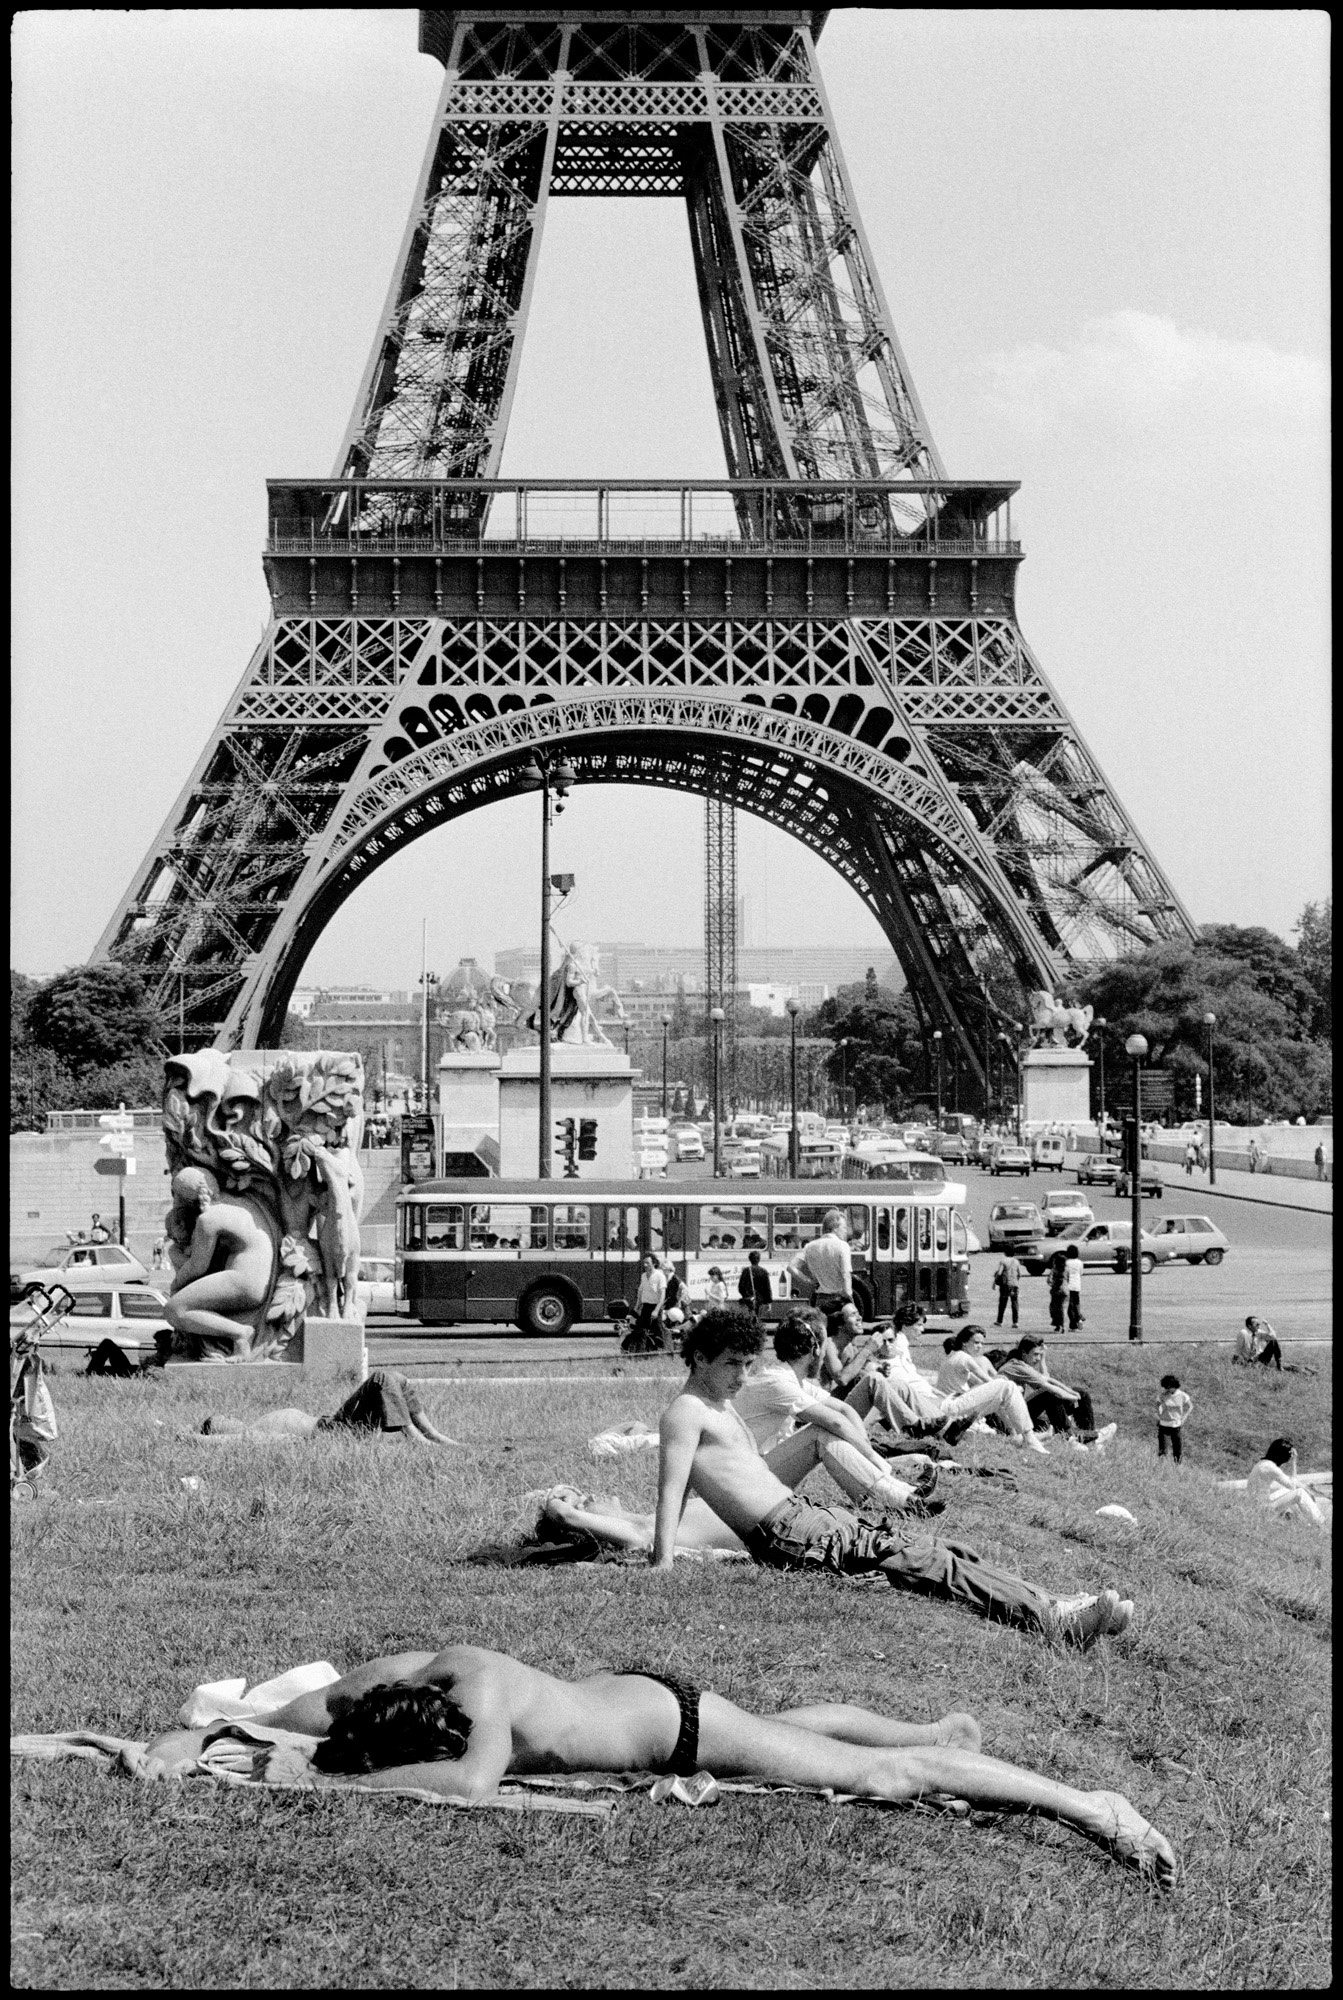 Yann Morvan, "Premier Paris plage", 15 juin 1981, Paris. © Yann Morvan / Courtesy Edisens